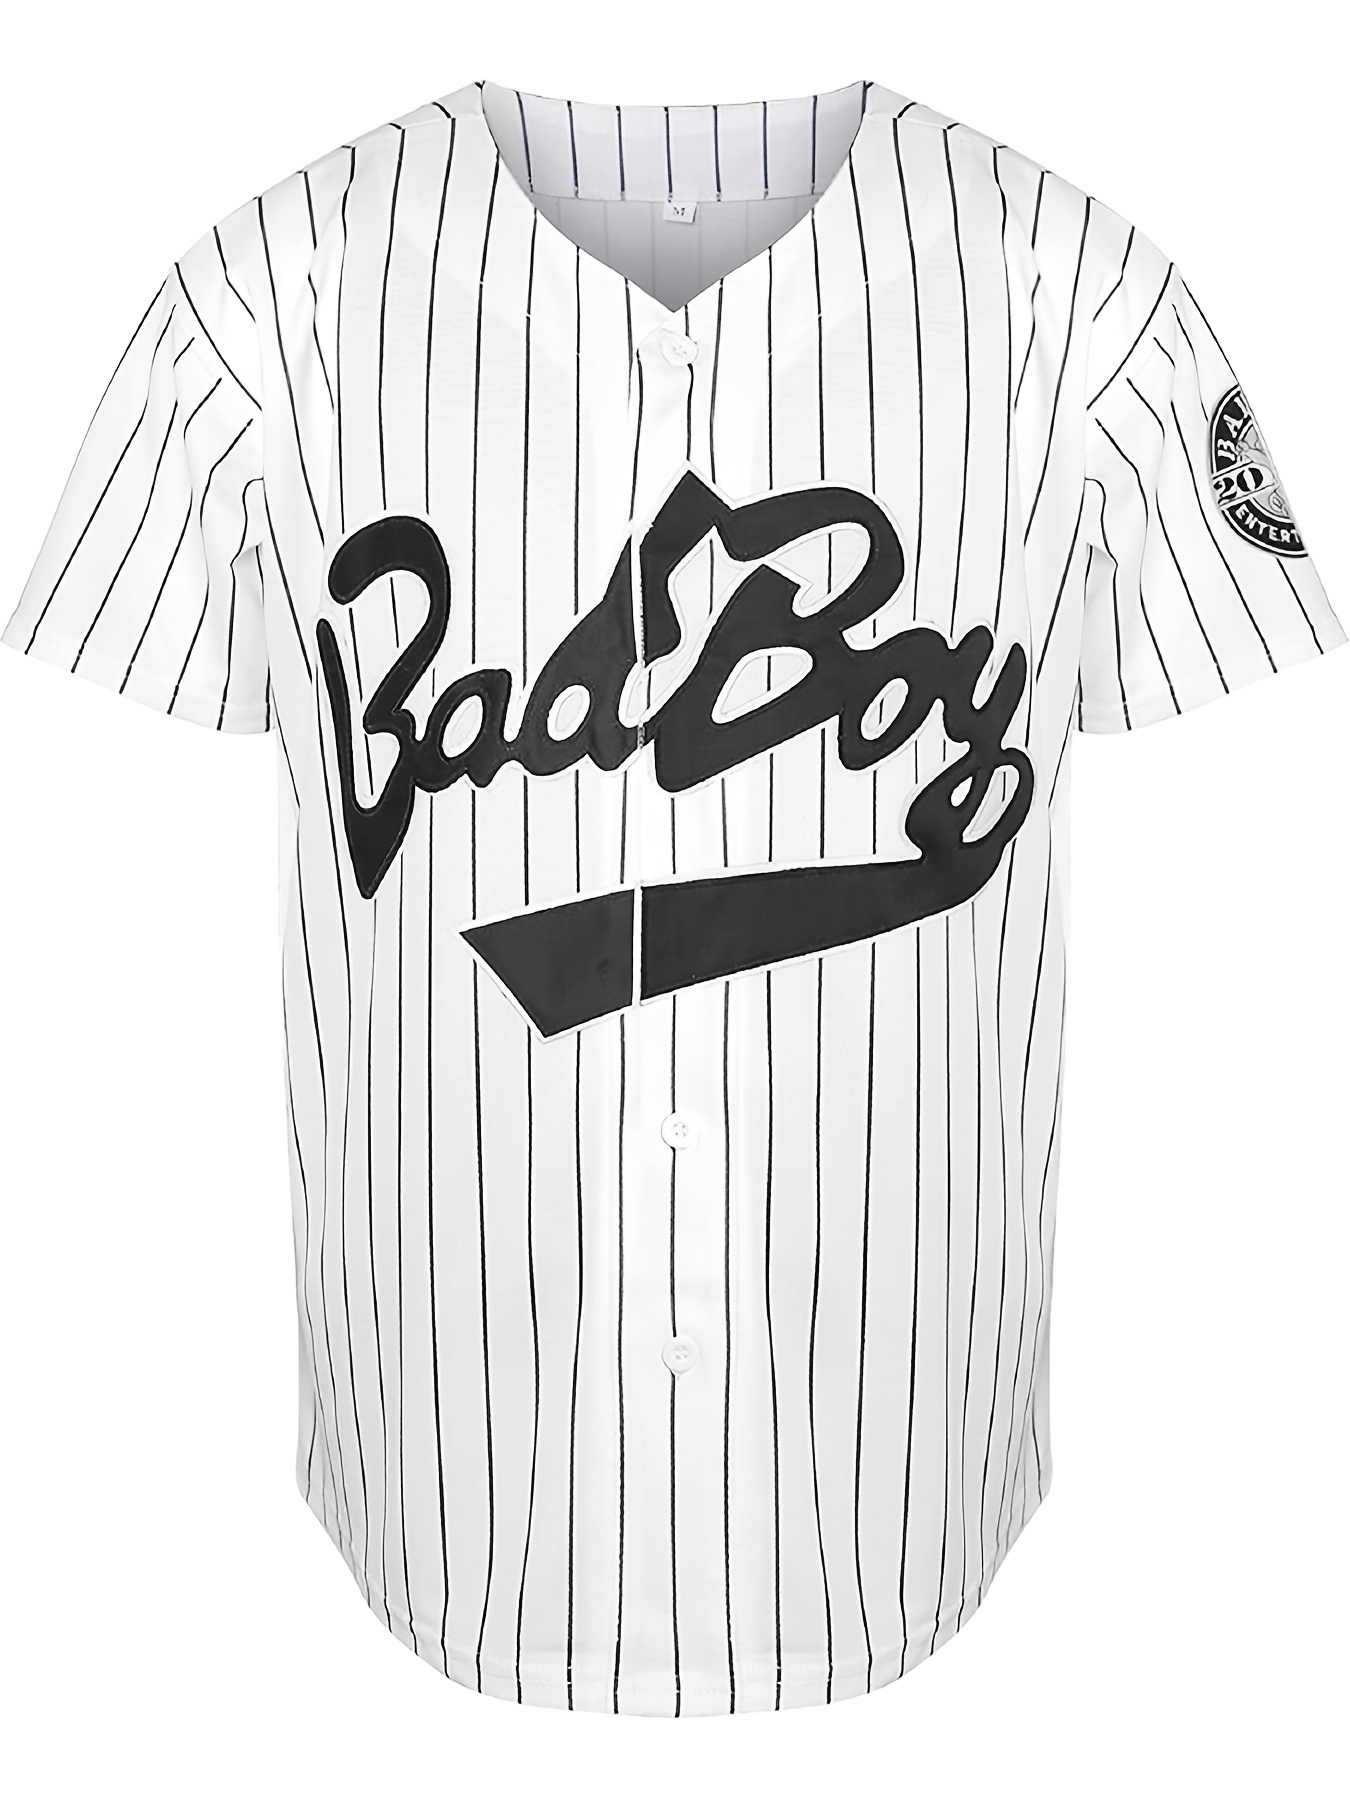 Biggie Smalls Jersey 10 Bad Boy Shirt 90s Hip Hop Clothing Stitched Movie Baseball  Jersey 